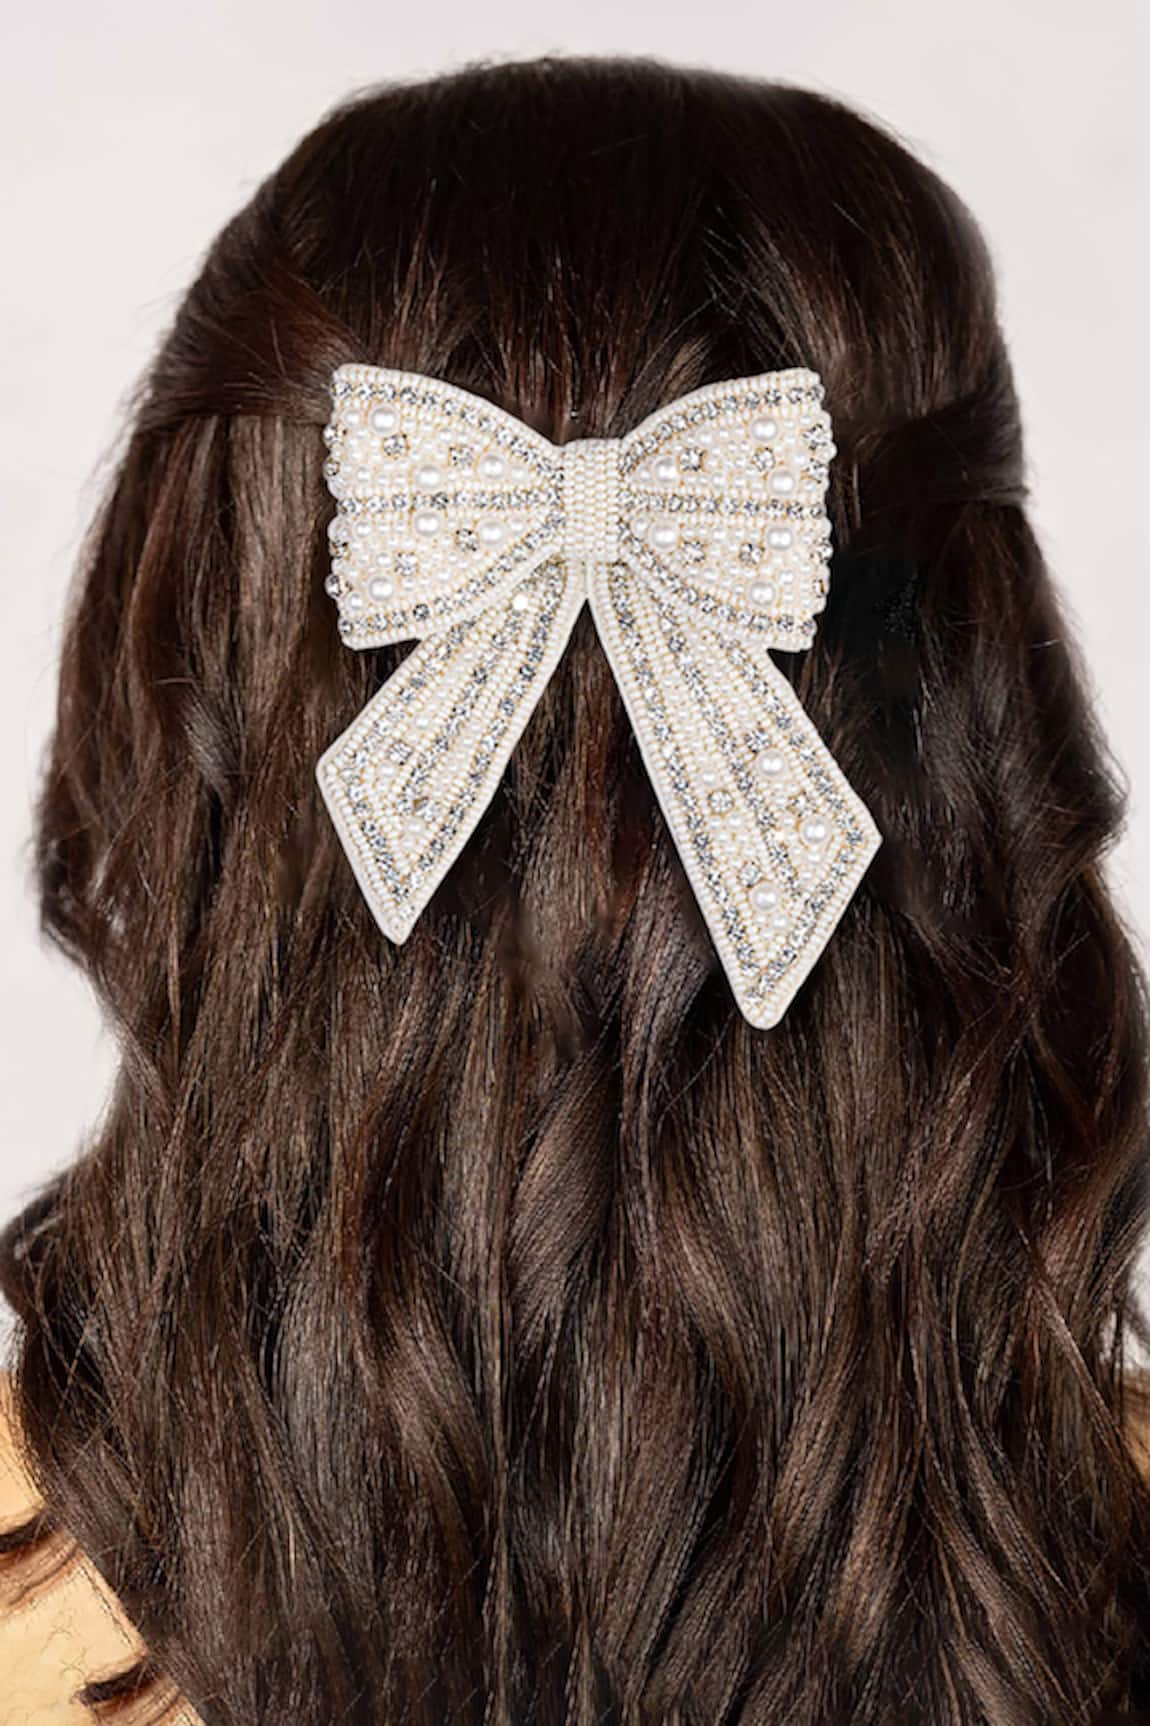 Hair Drama Co Crystal & Pearls Embellished Hair Bow